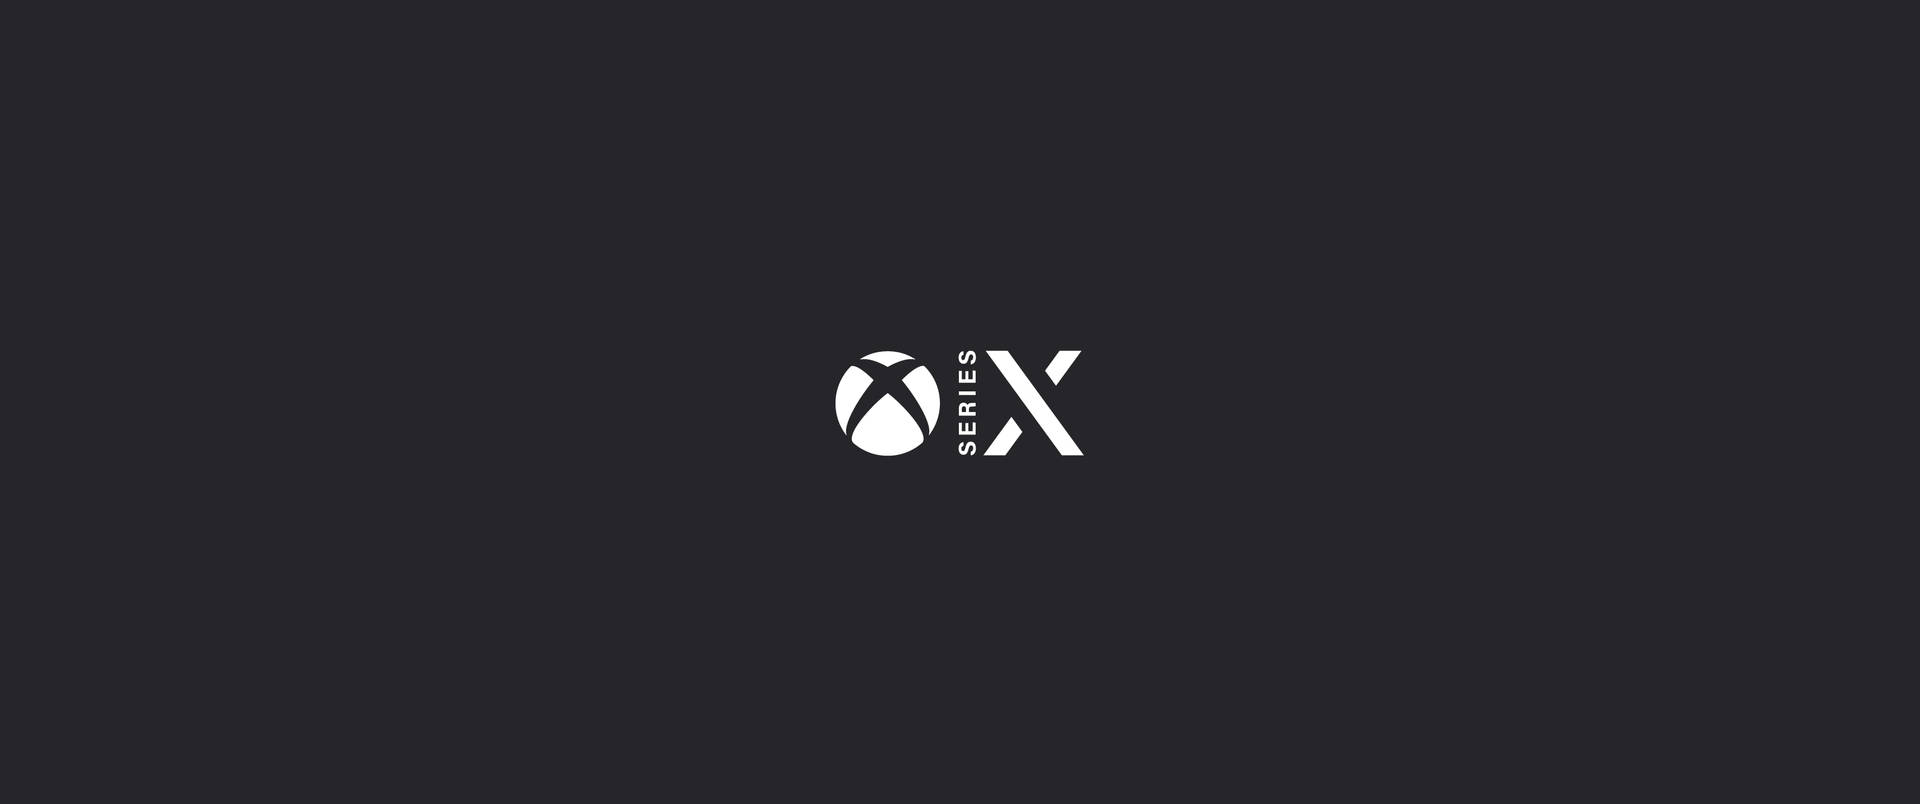 Xboxseries X Minimalistisches Dunkelgrau Wallpaper